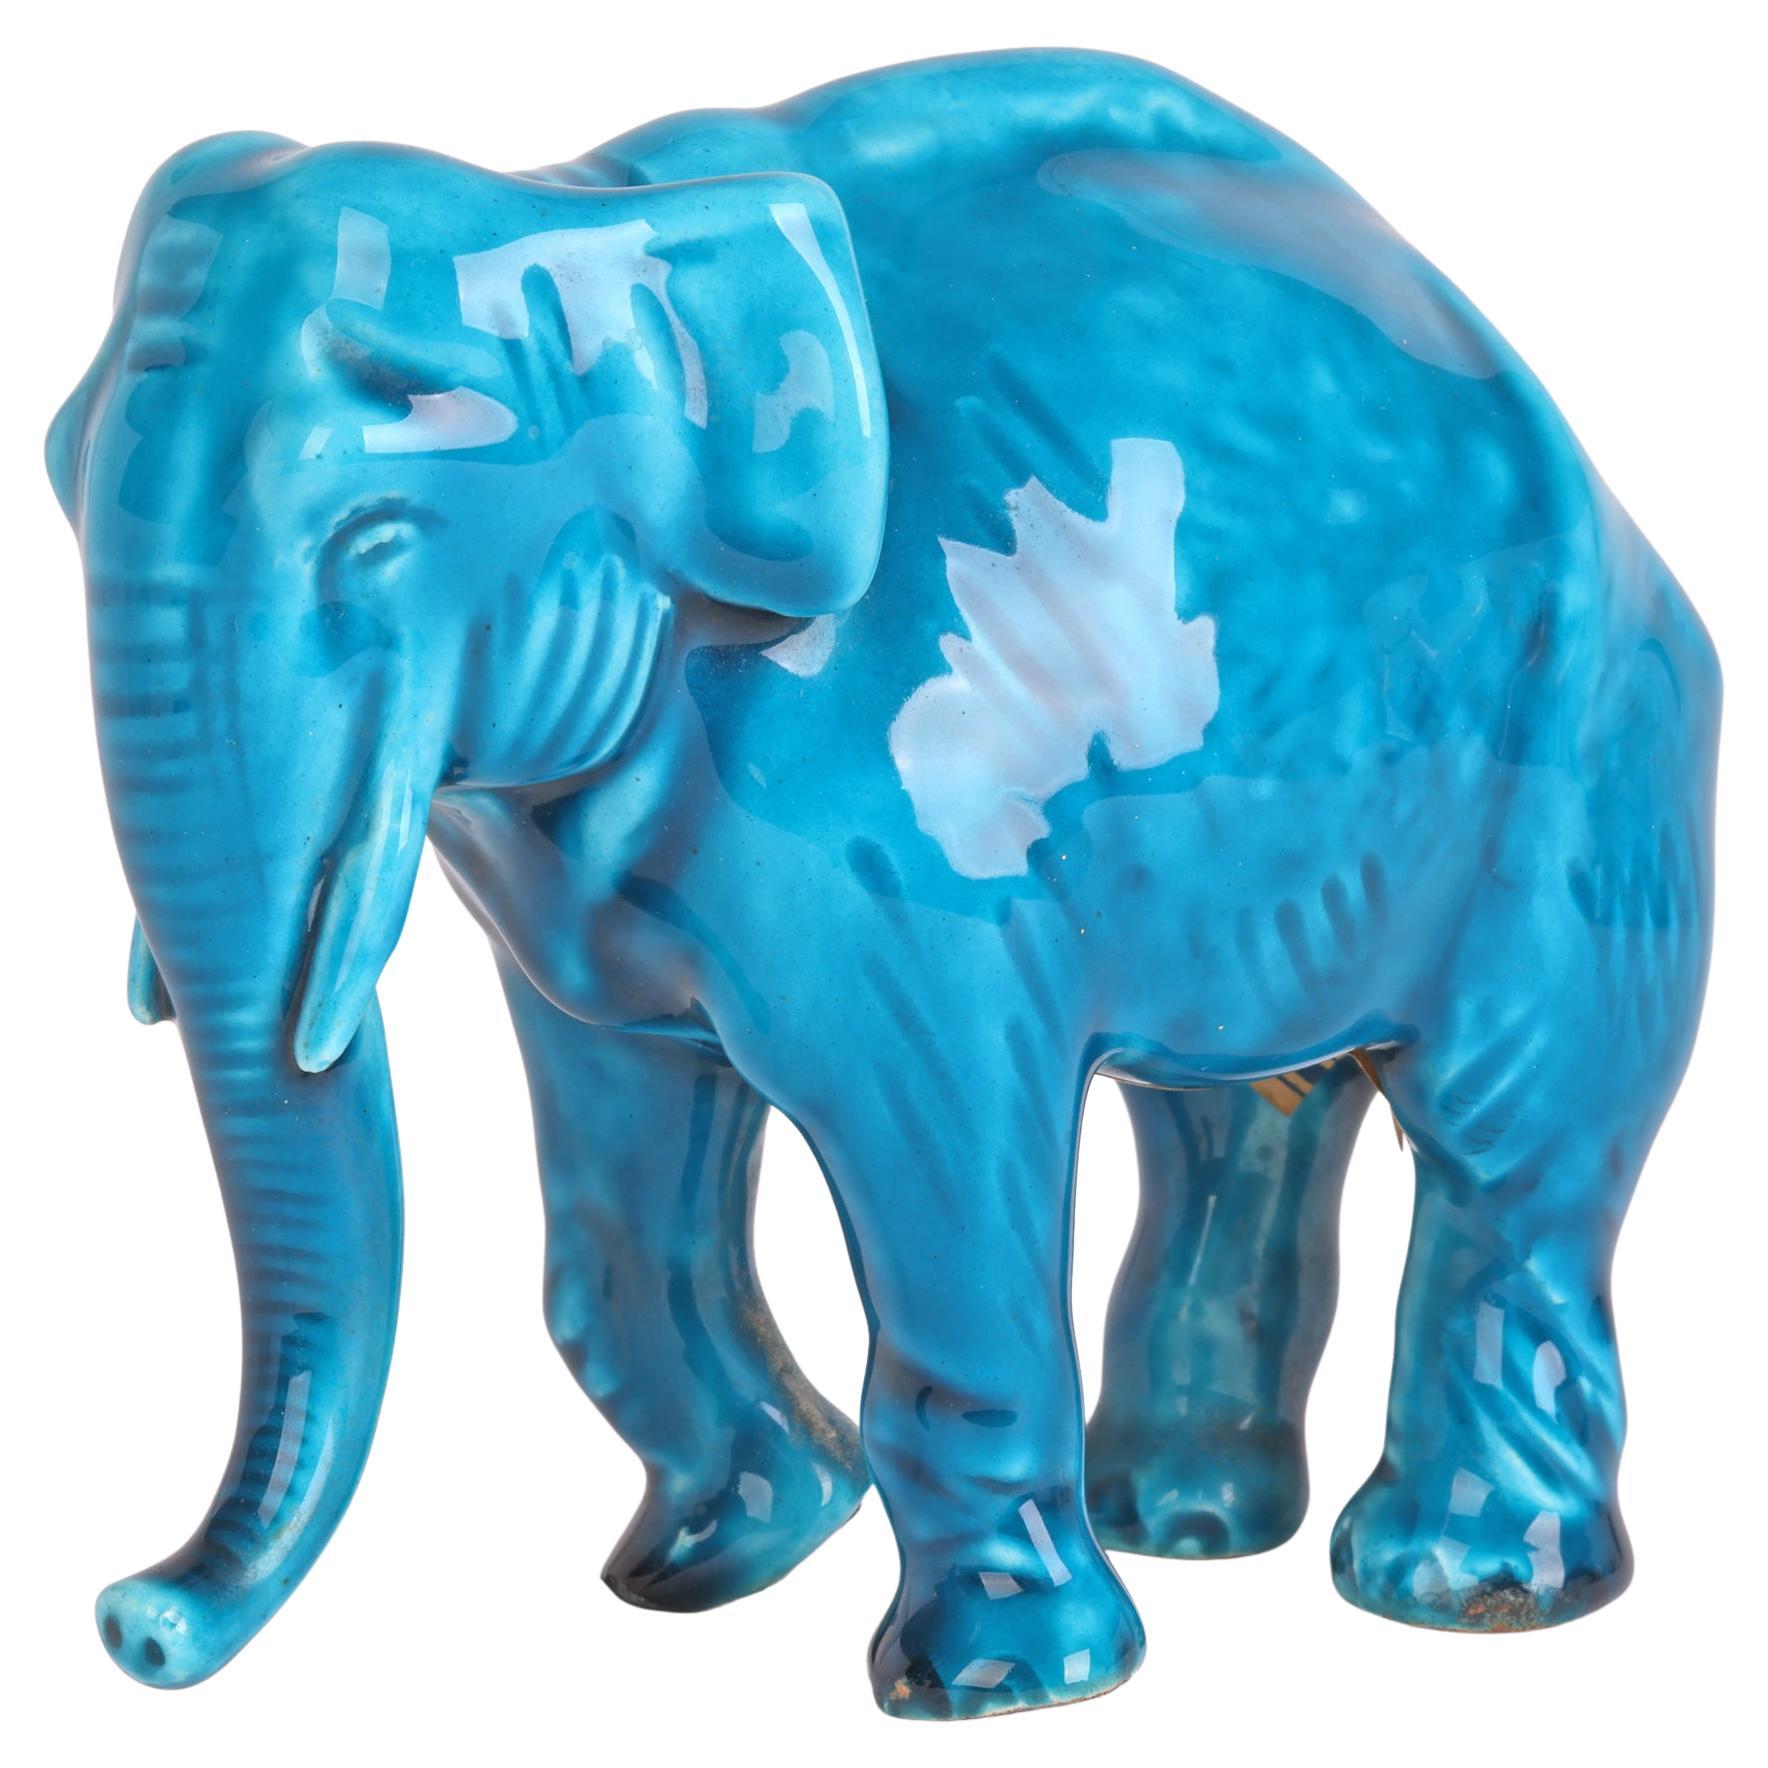 Paul Milet Sevres Turquoise Glazed Ceramic Elephant Figure    For Sale